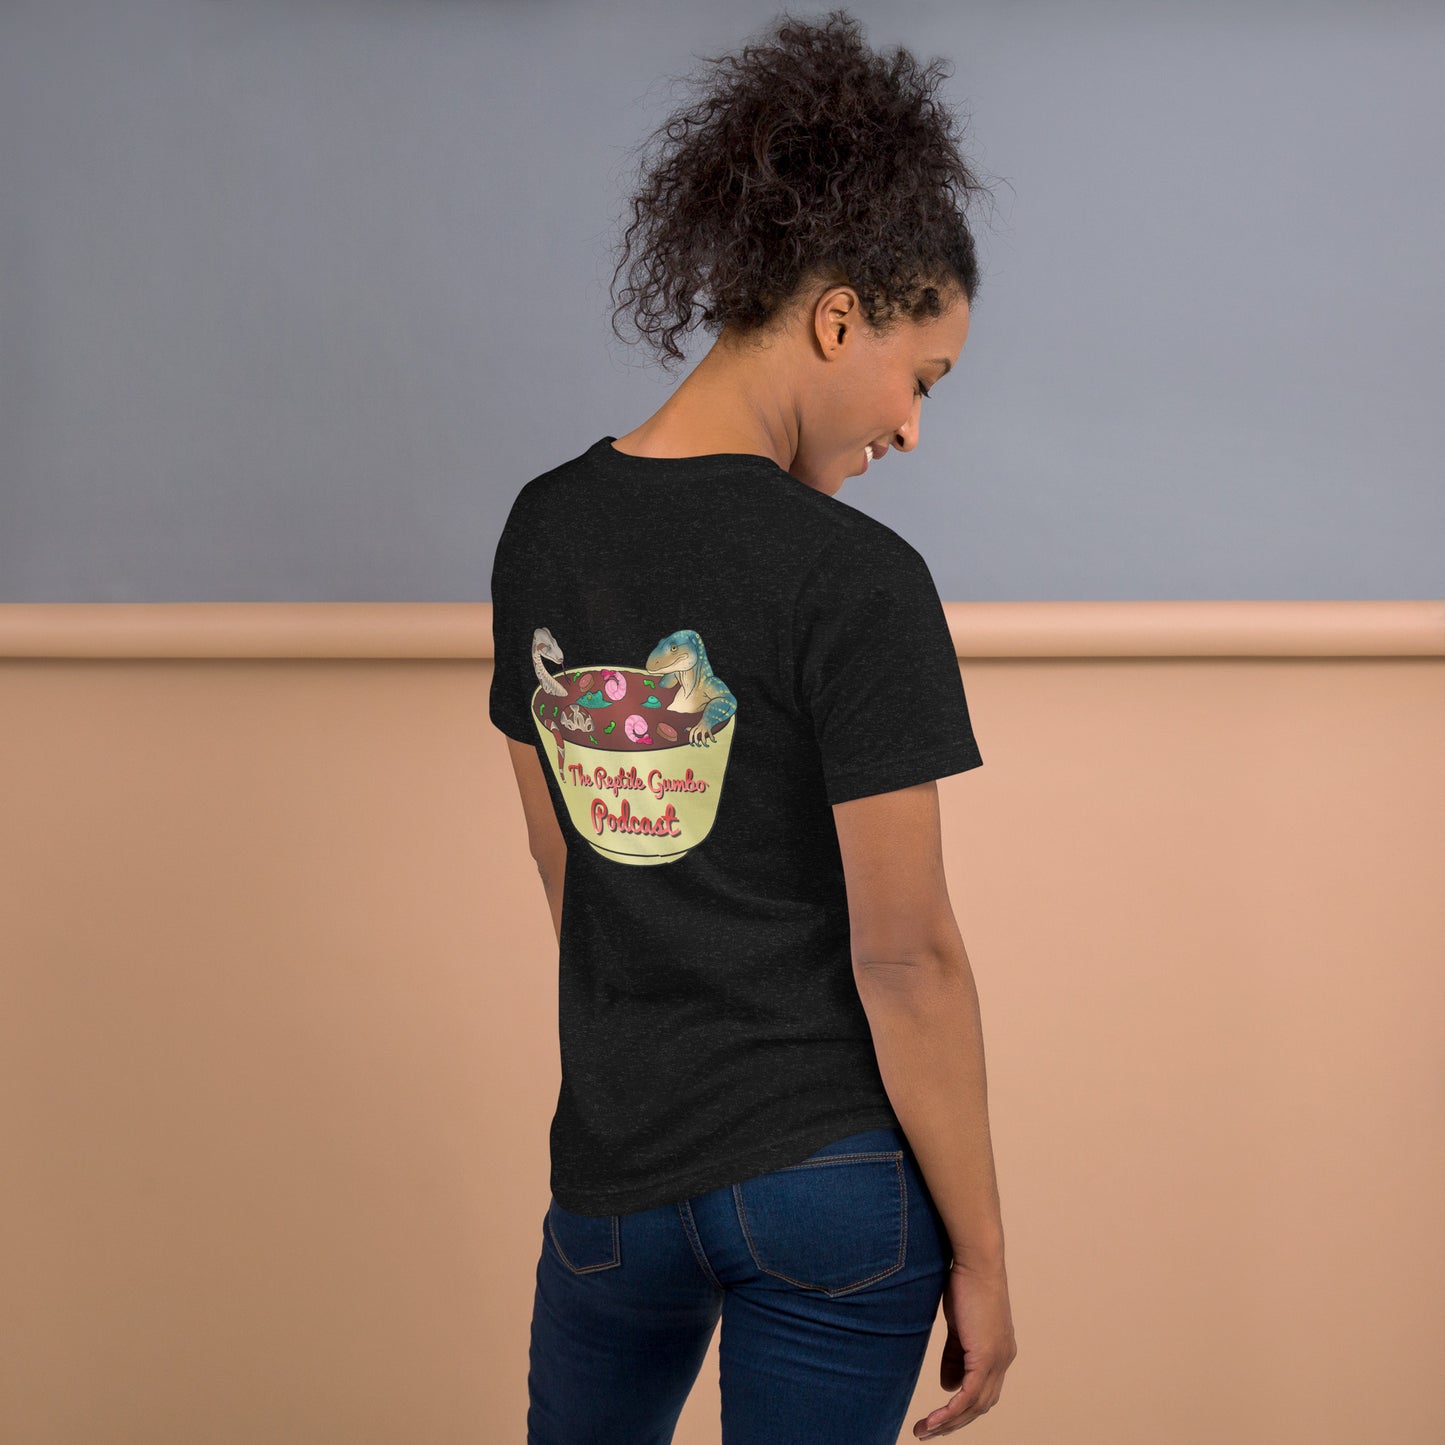 Both Reptile Gumbo Logos on Unisex t-shirt